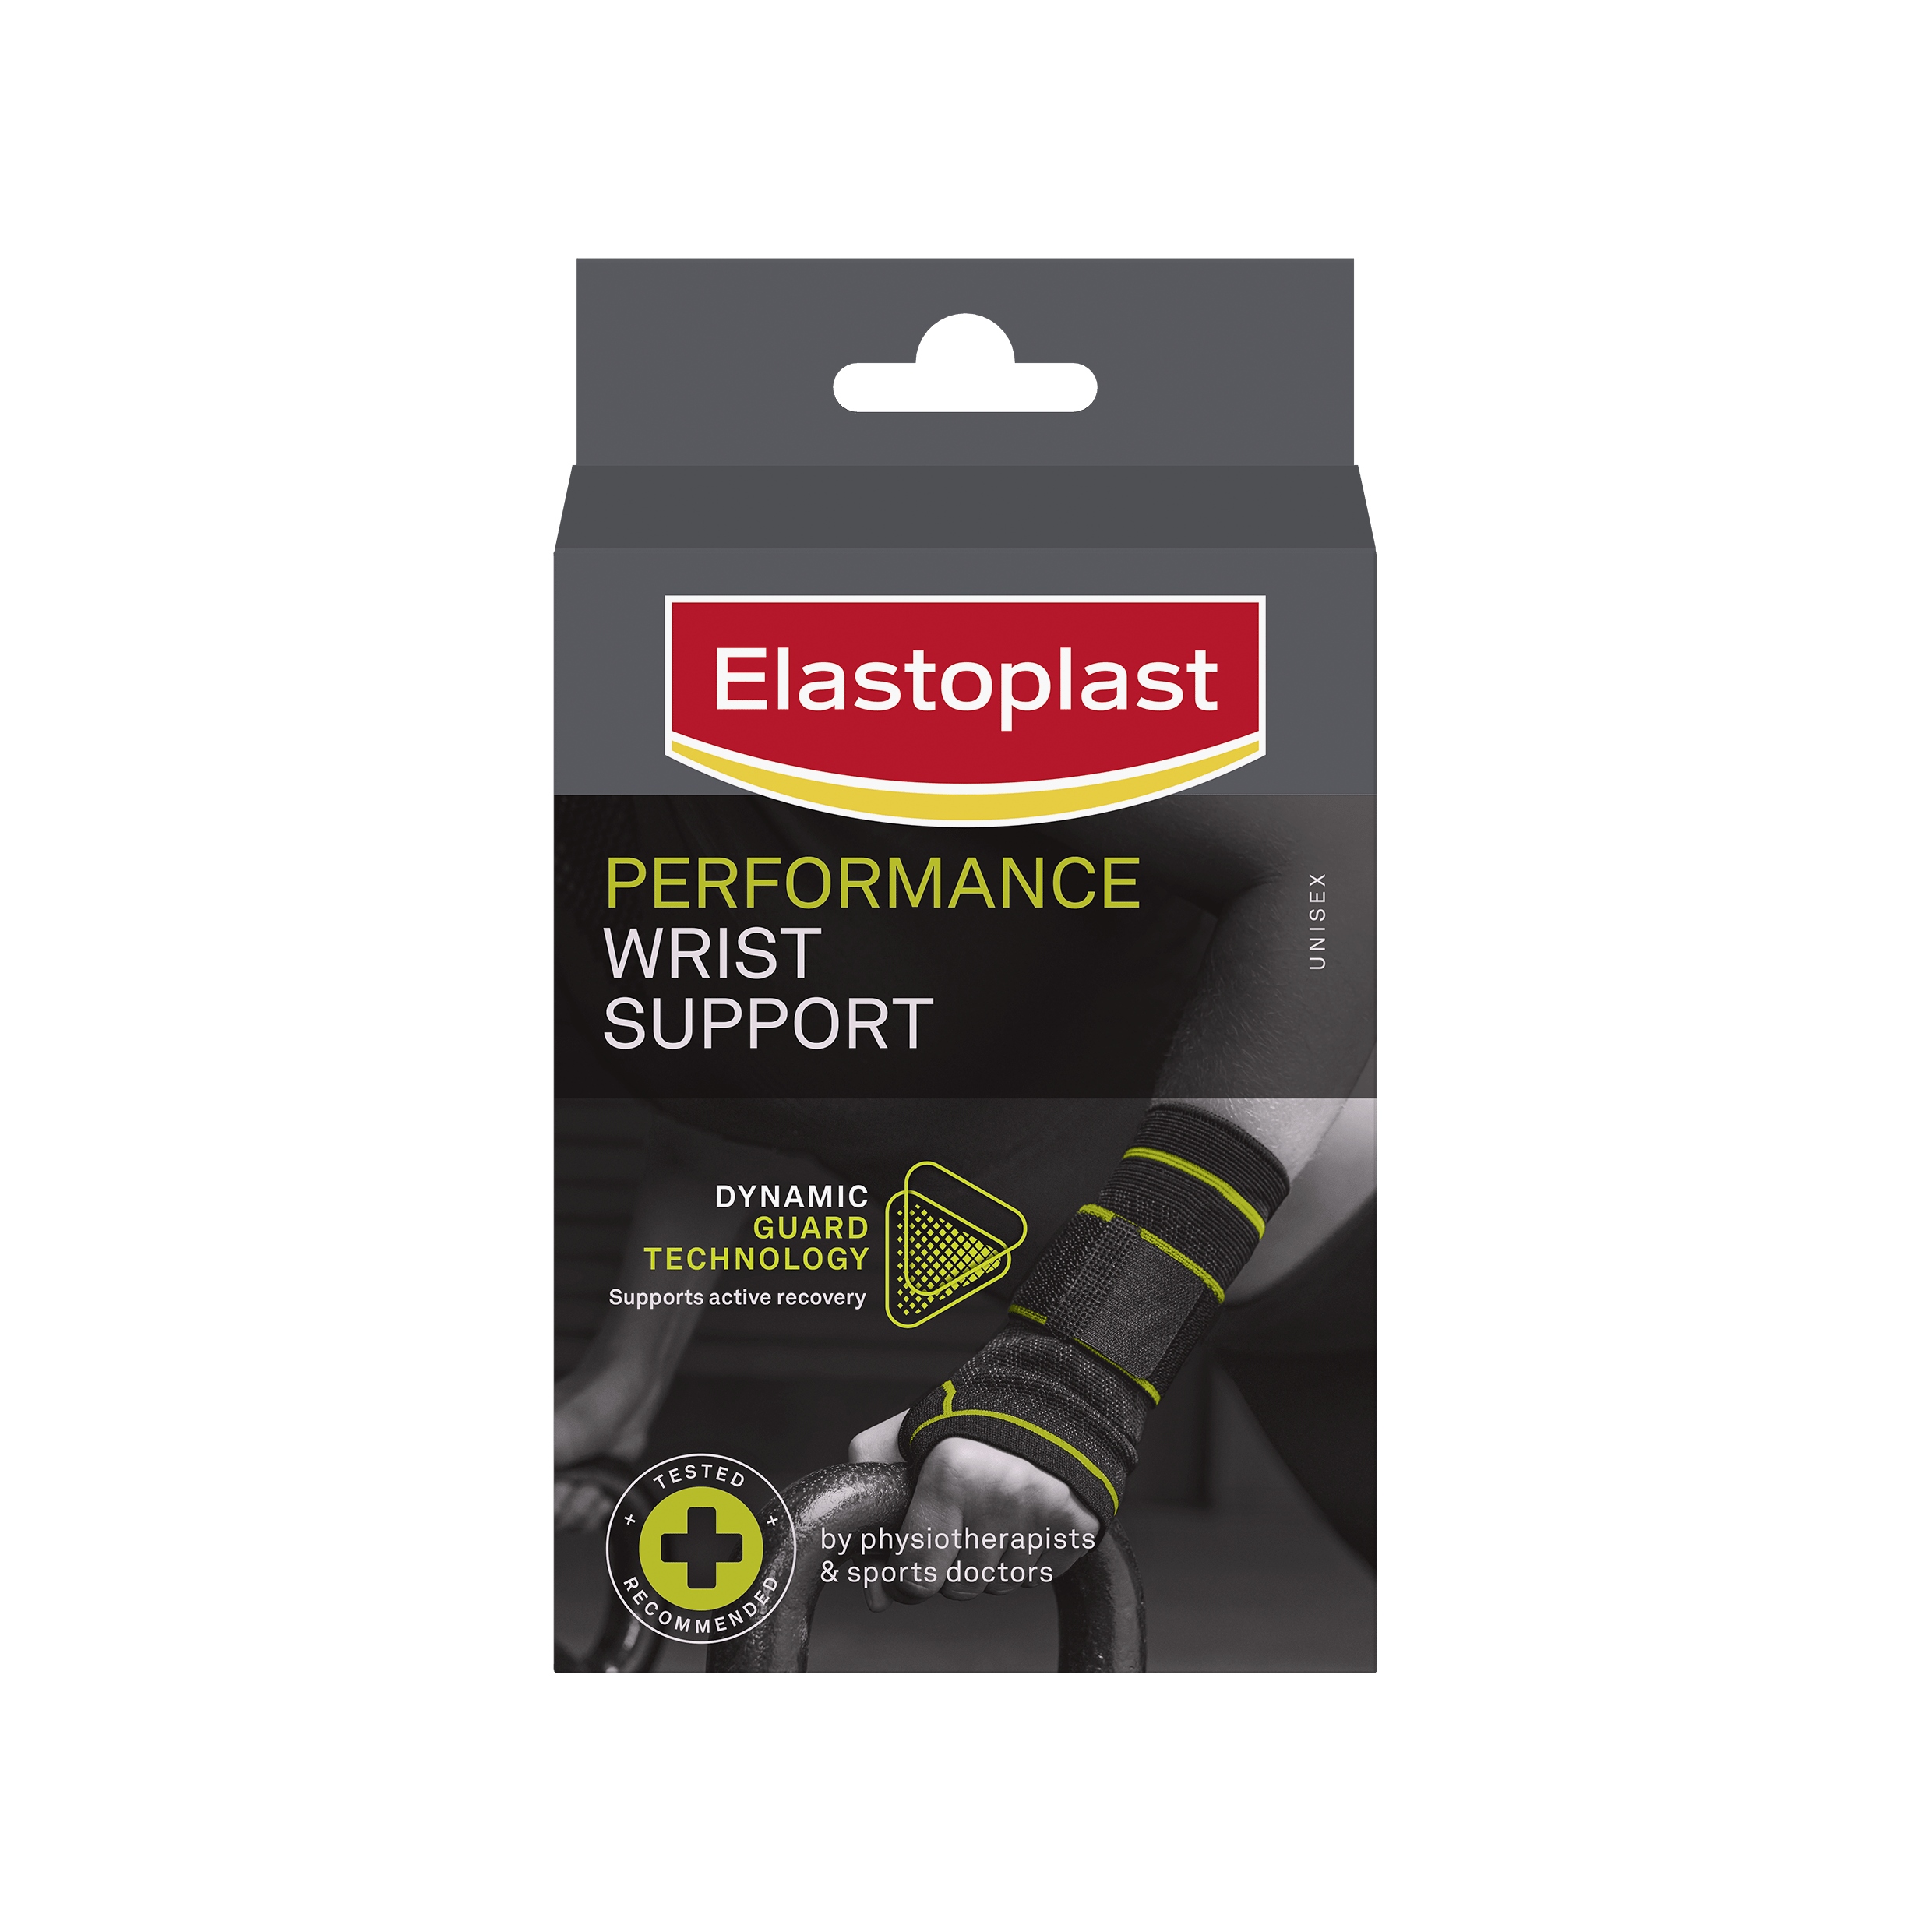 Buy Elastoplast Tennis Elbow Support Online at Chemist Warehouse®